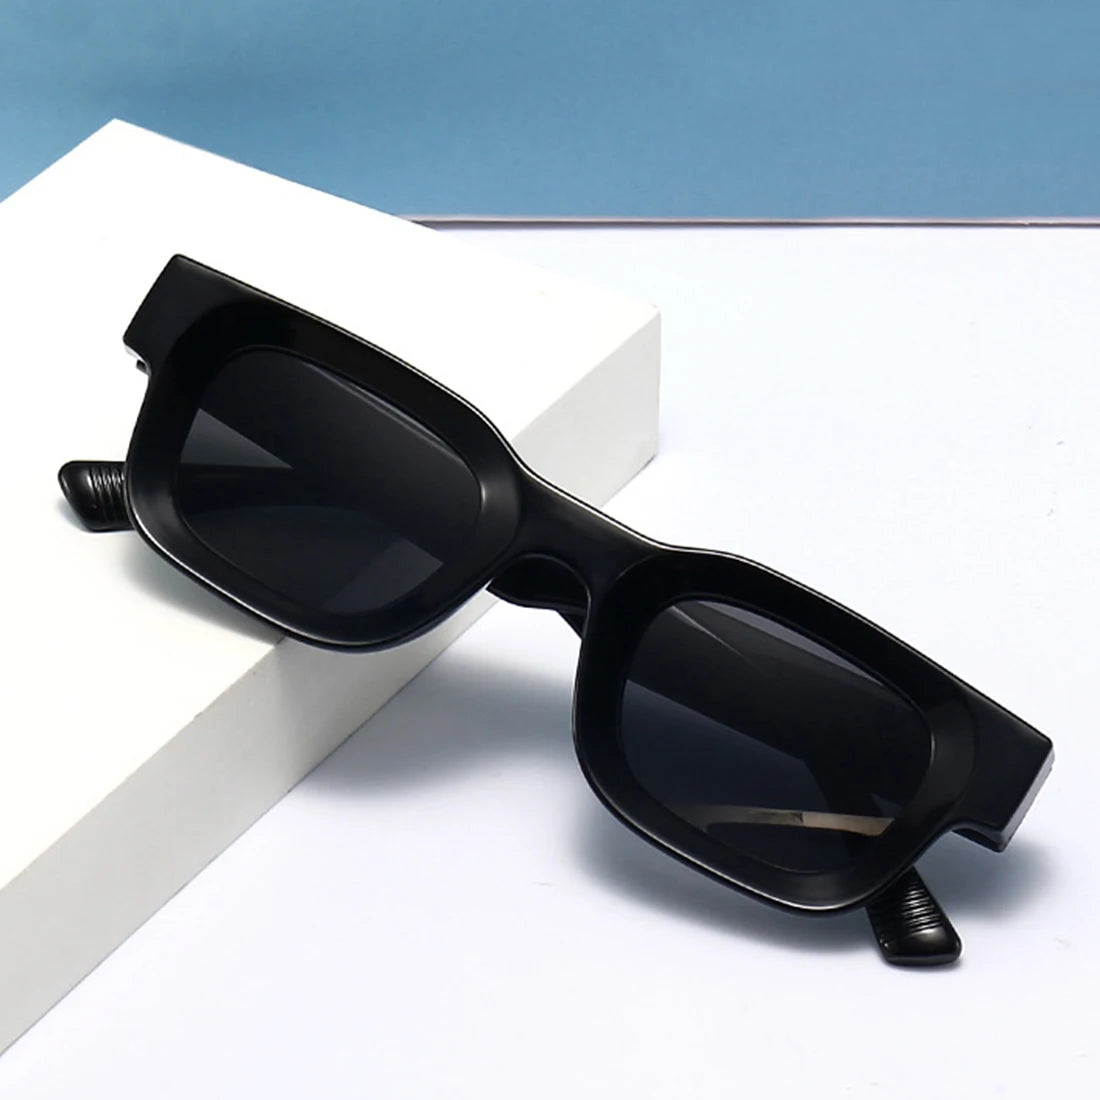 Vintage Rectangle Frame Sunglasses